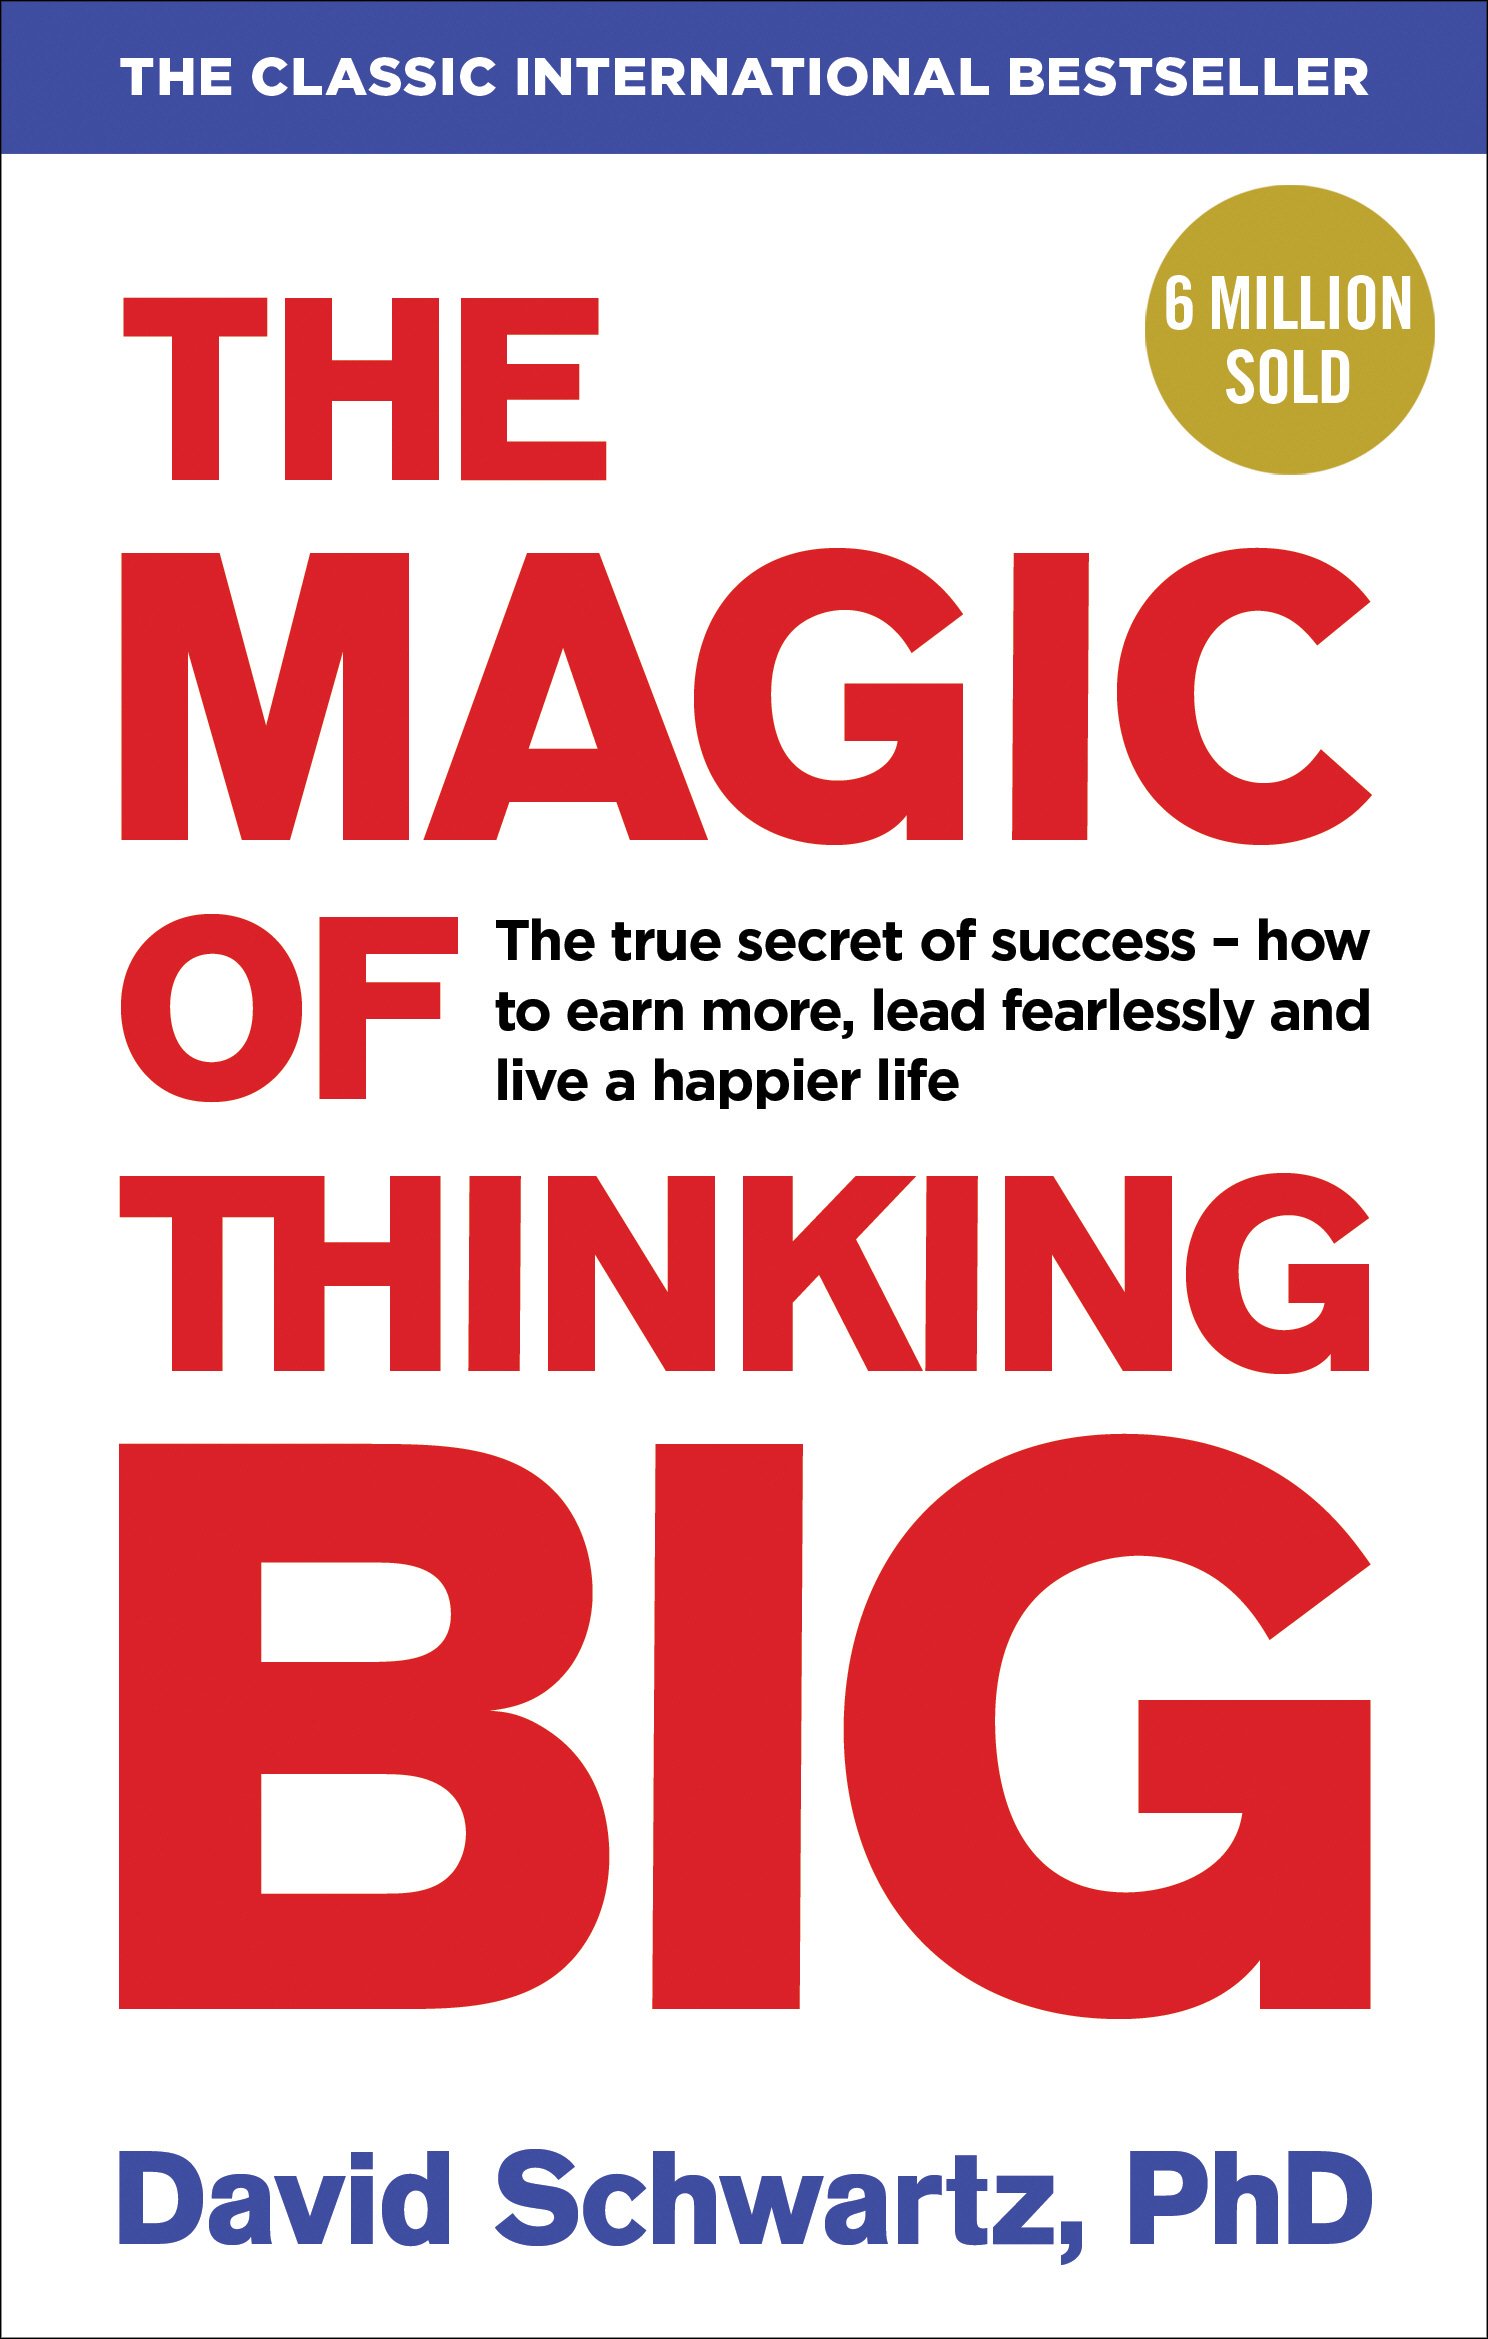 Magic of thinking big by David J. Schwartz